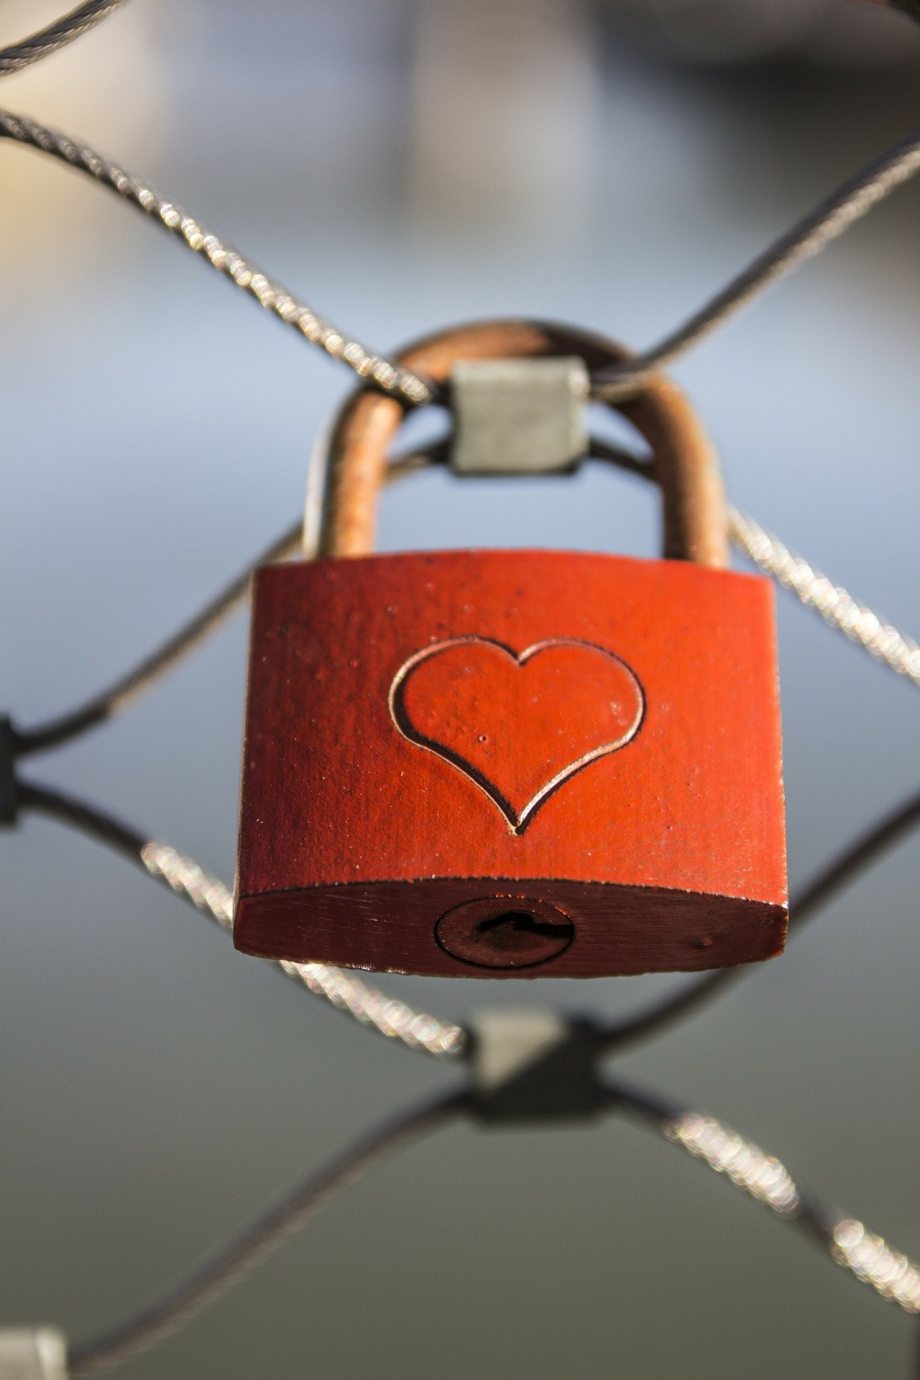 fence-lock-love-padlock-38866